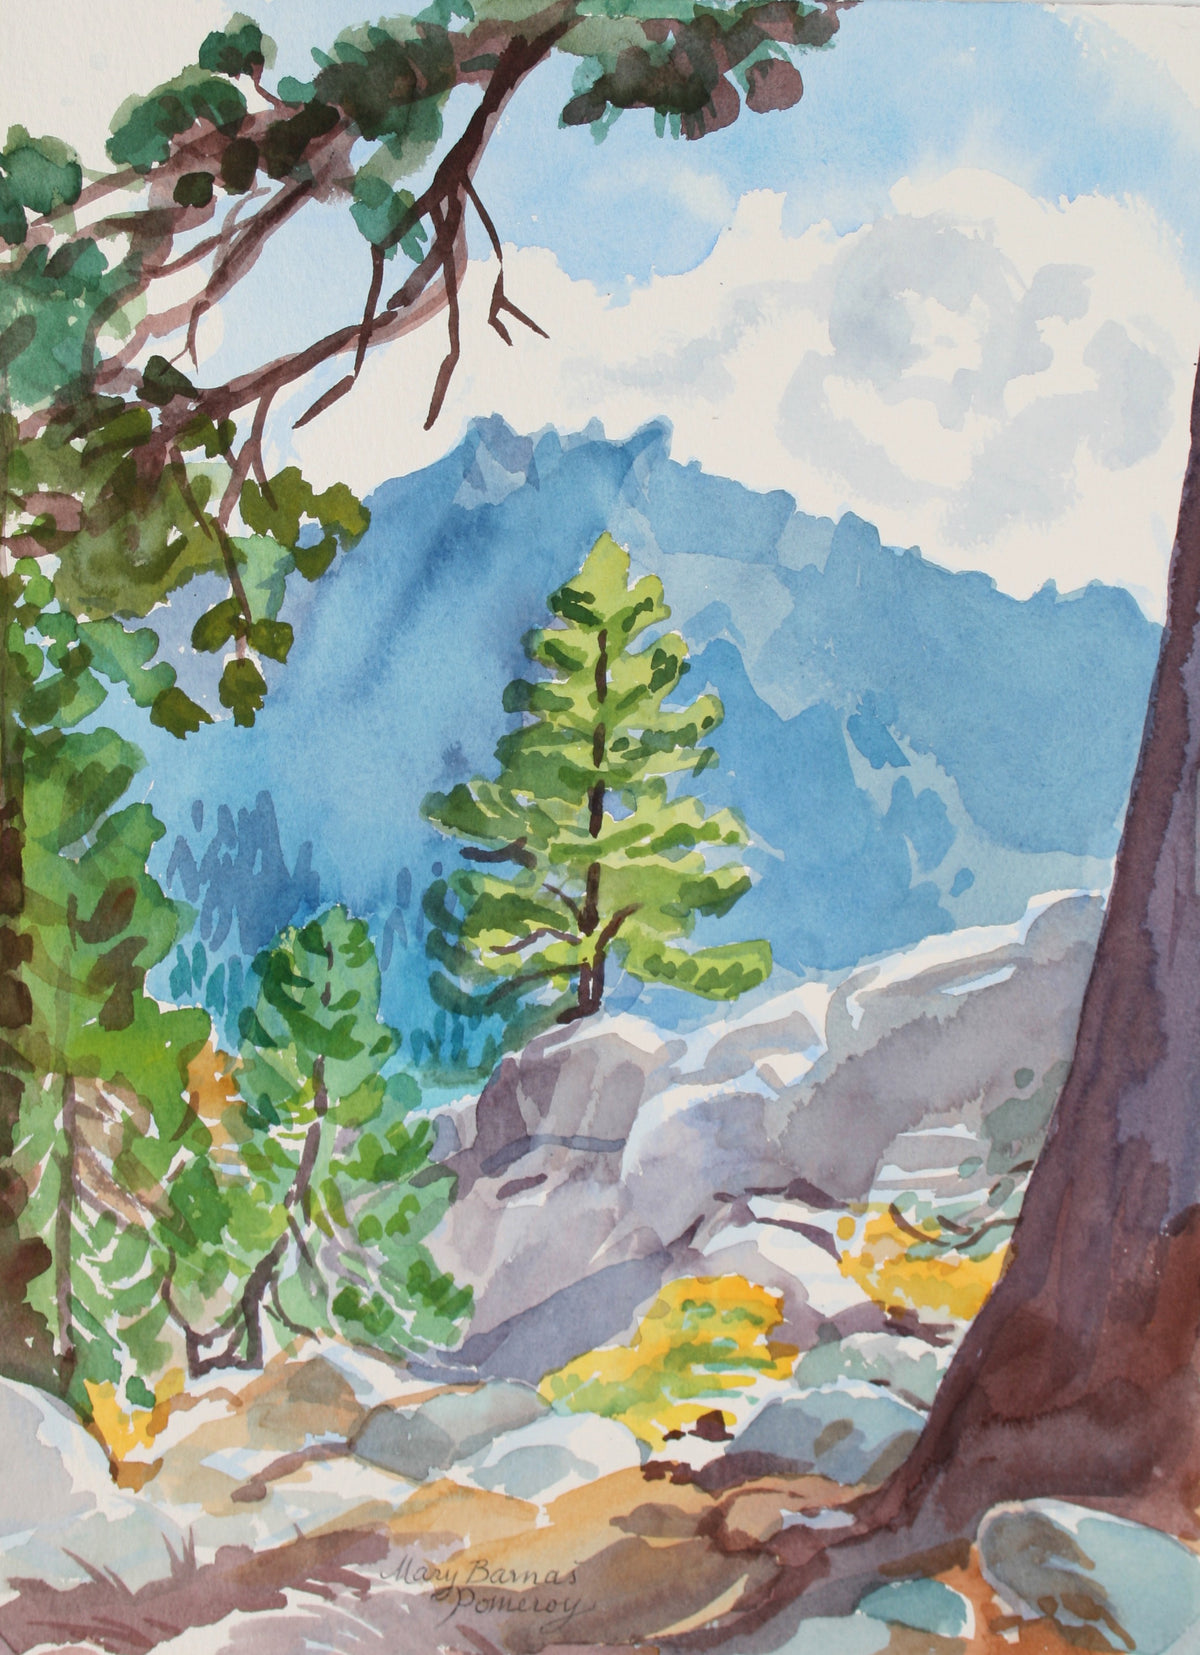 &lt;i&gt;Toward Thunder Mountain&lt;/i&gt;&lt;br&gt;September 1997 Watercolor&lt;br&gt;&lt;br&gt;#72027